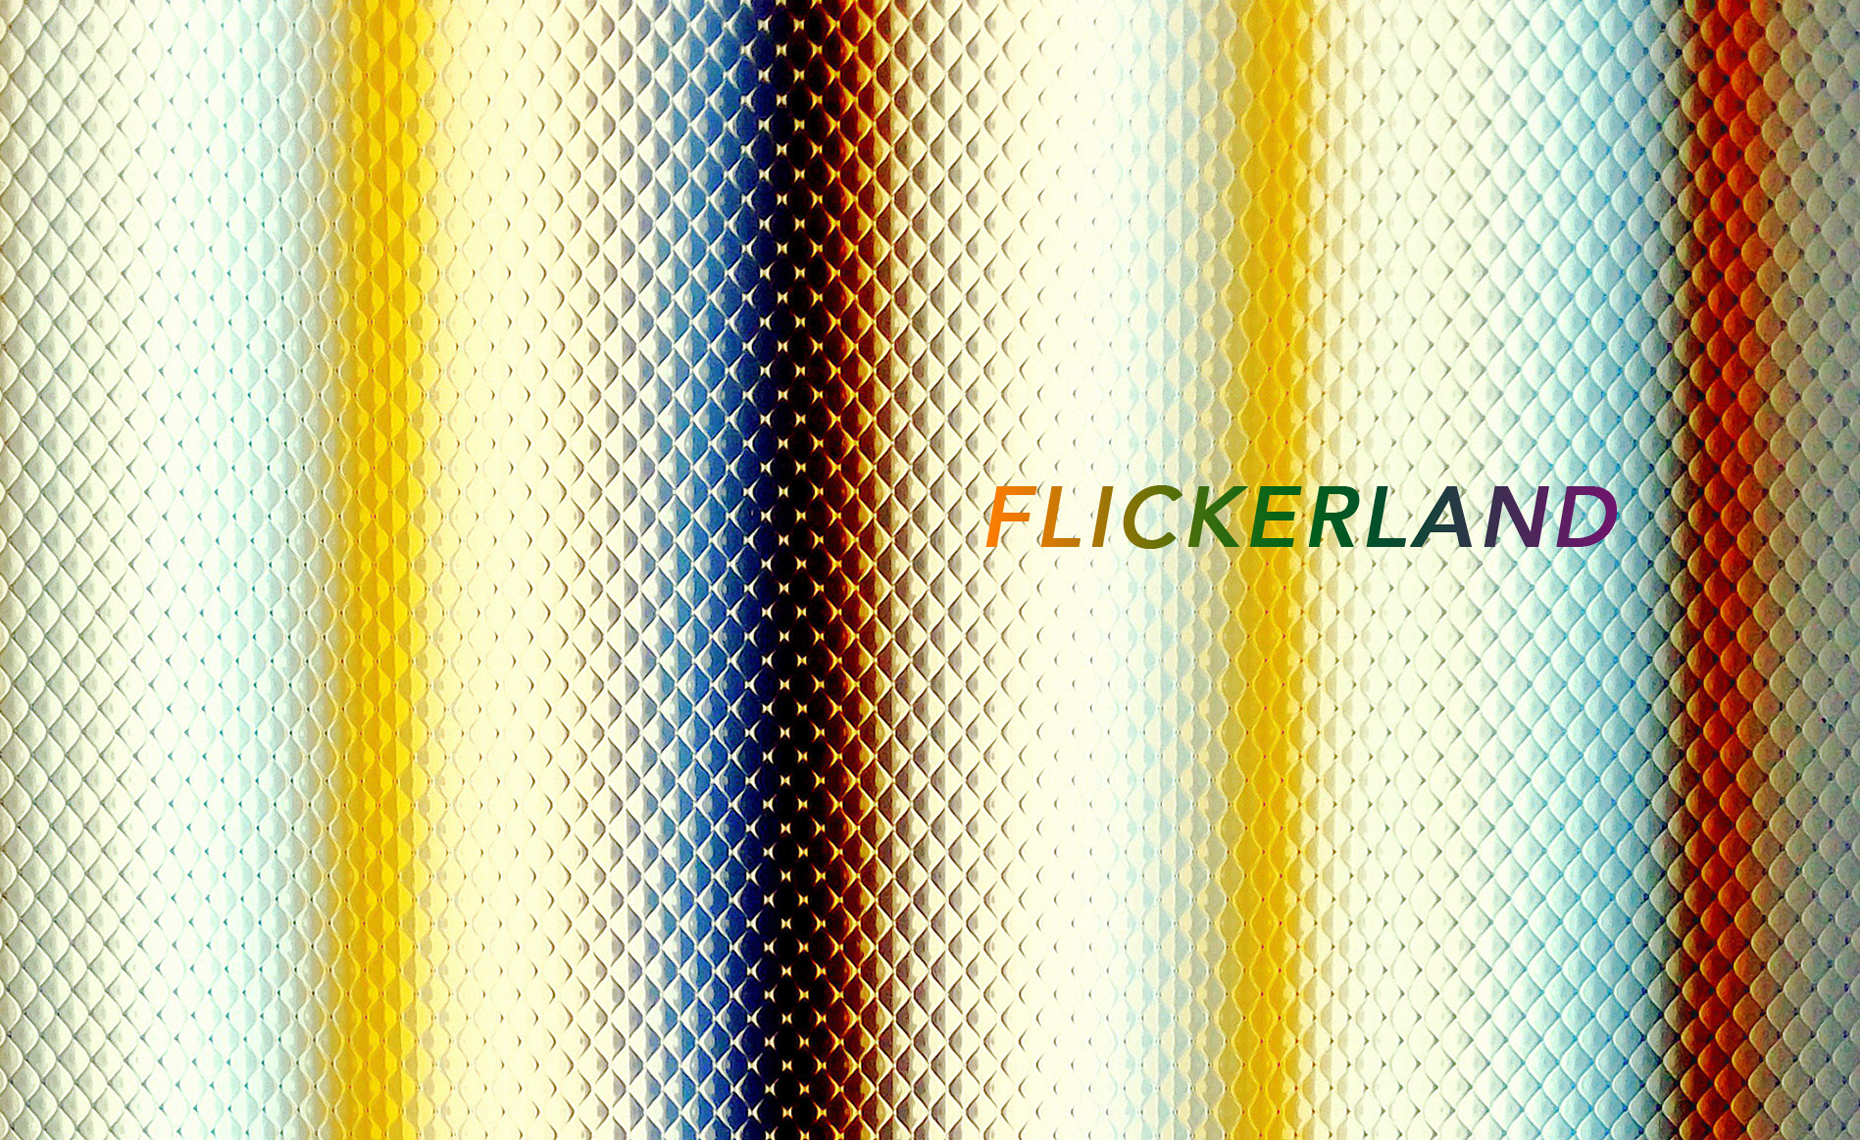 flickerland_background_withlogo.copy2